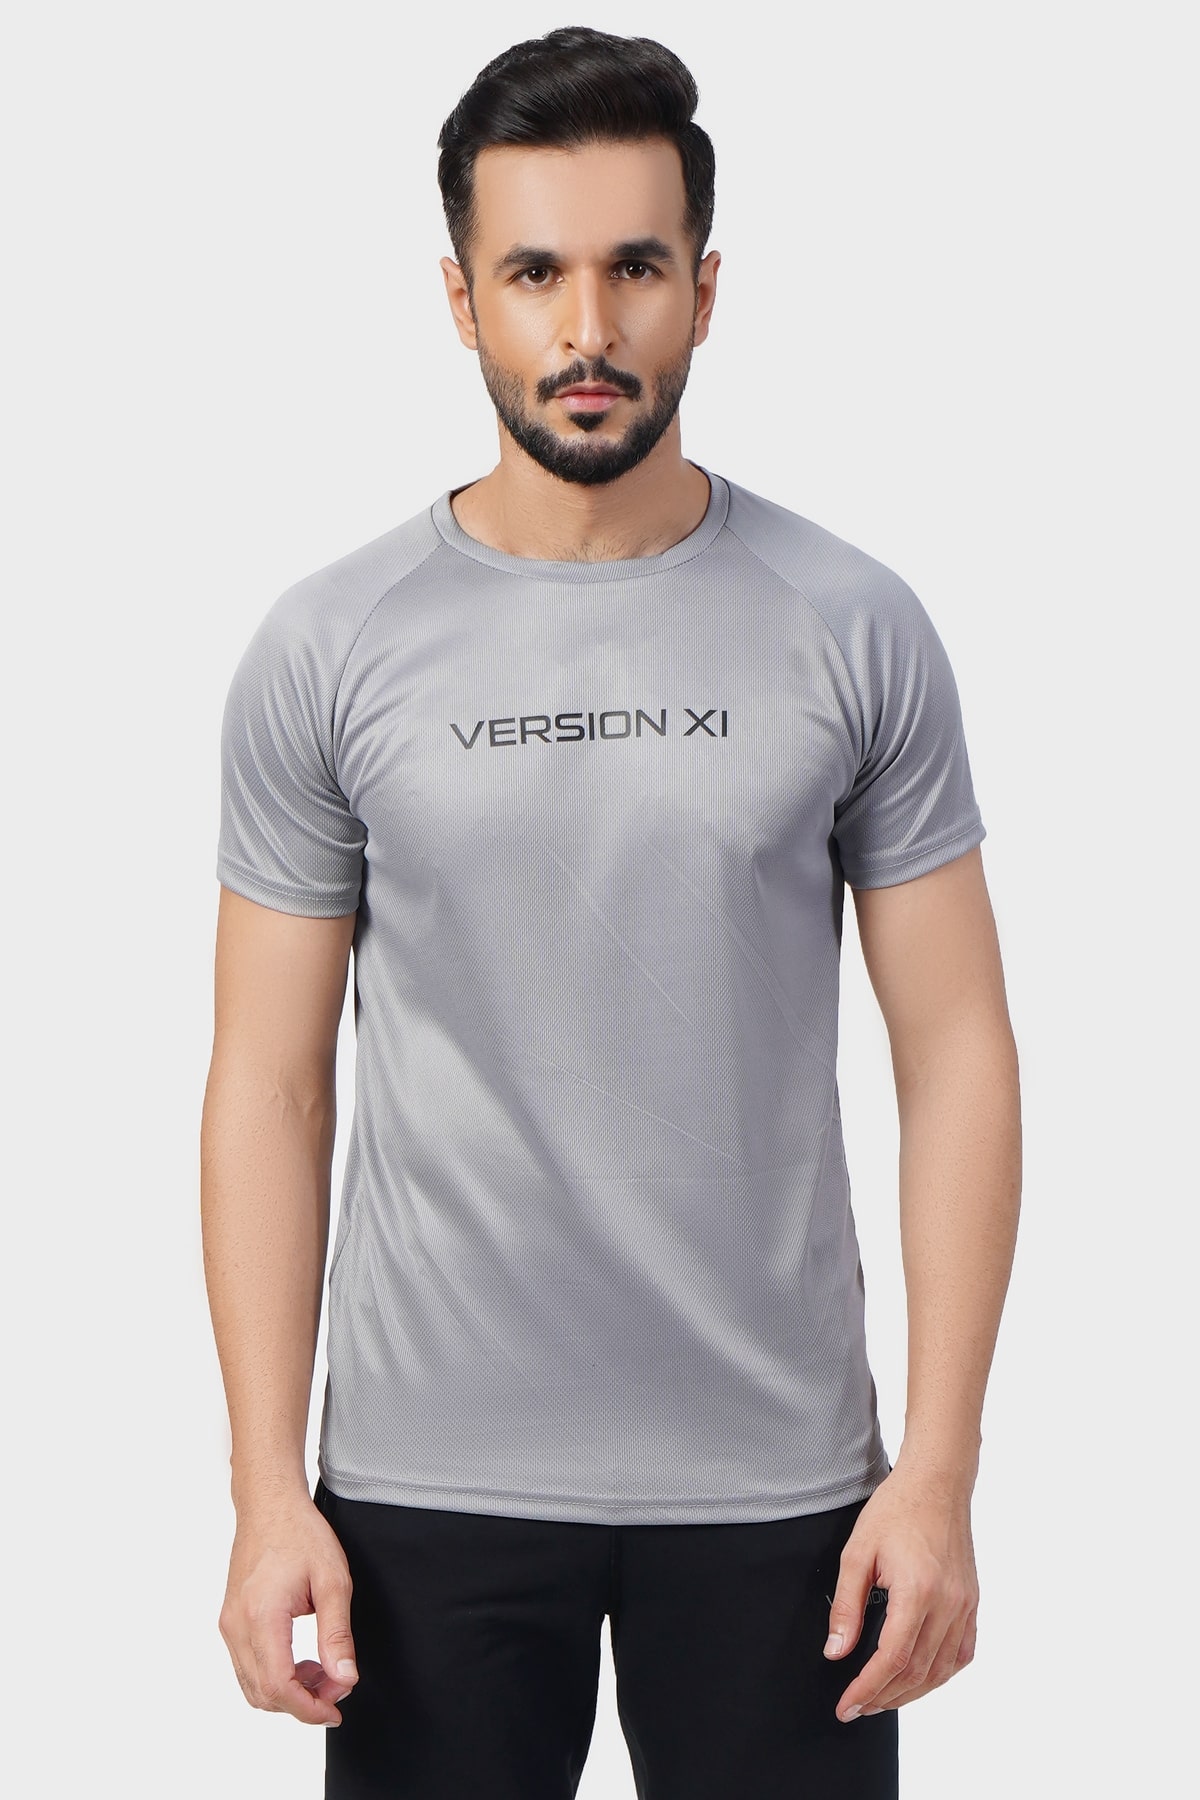 Micro Mesh Men's Gray T-Shirt